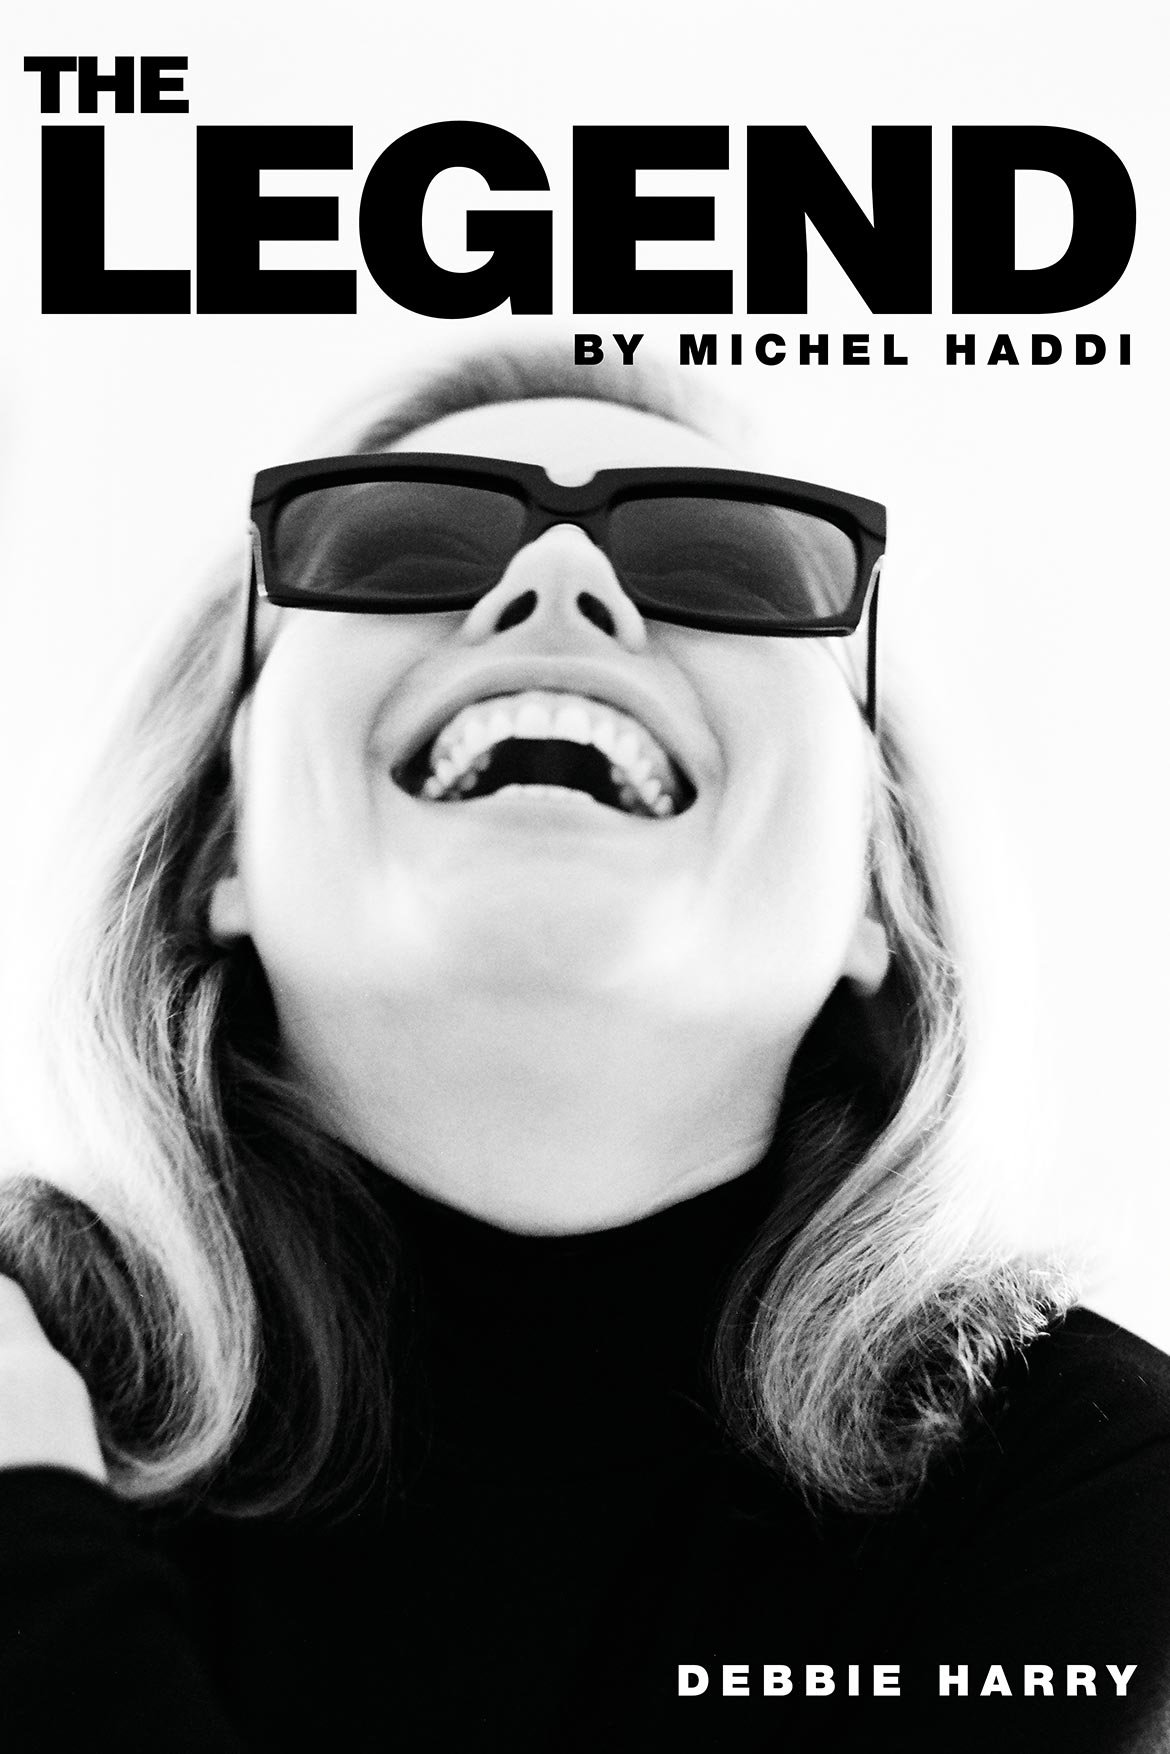 The Legend - Debbie Harry by Michel Haddi